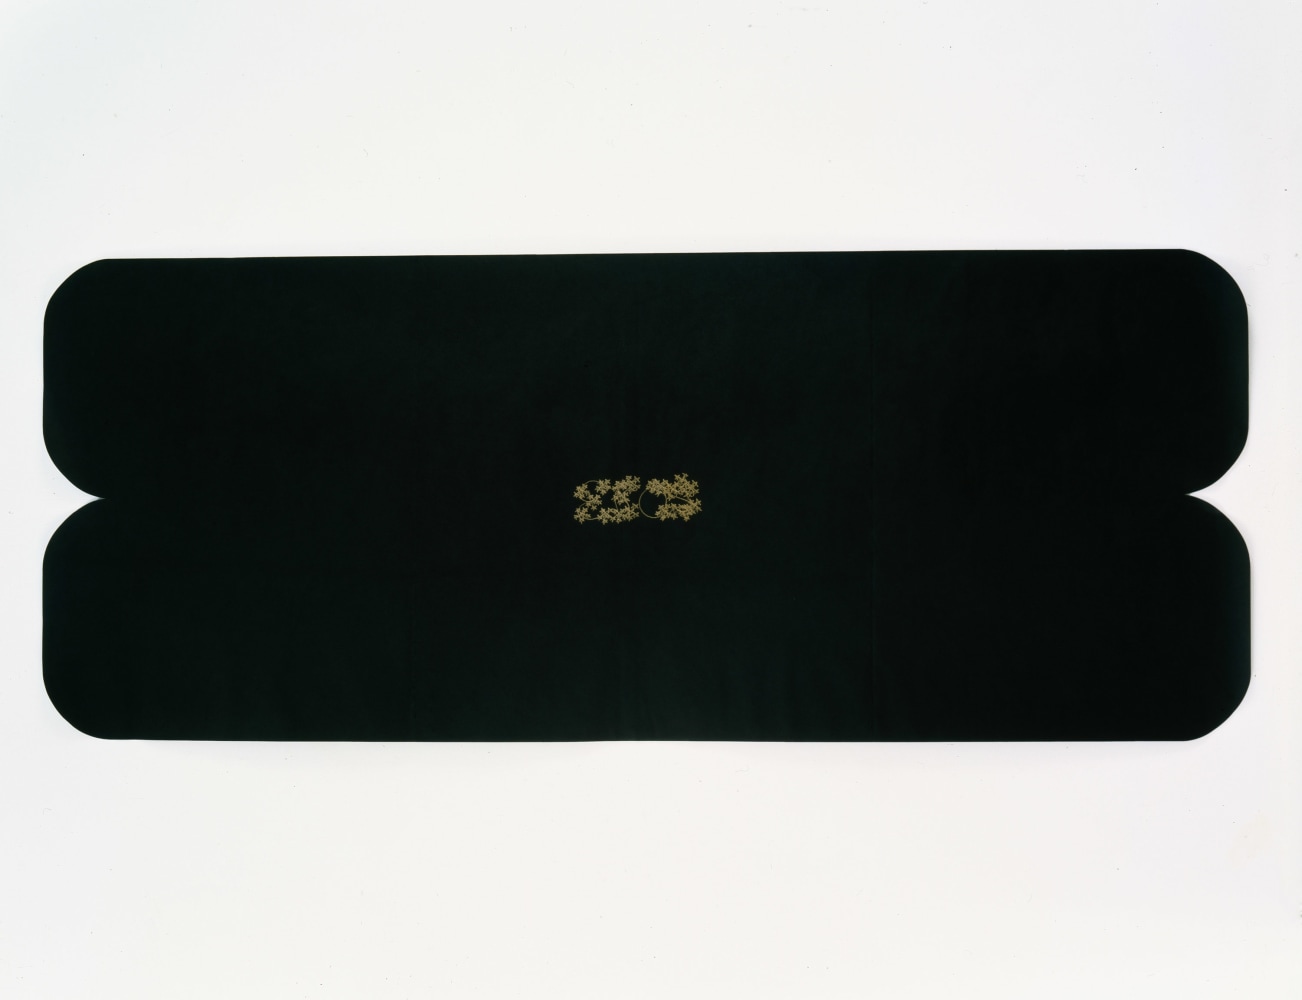 James Lee Byars

&amp;ldquo;Eros&amp;rdquo;, 1993

Gold pencil on black Japanese paper

26 3/4 x 67 inches

68 x 170 cm

JBZ 190

$175,000